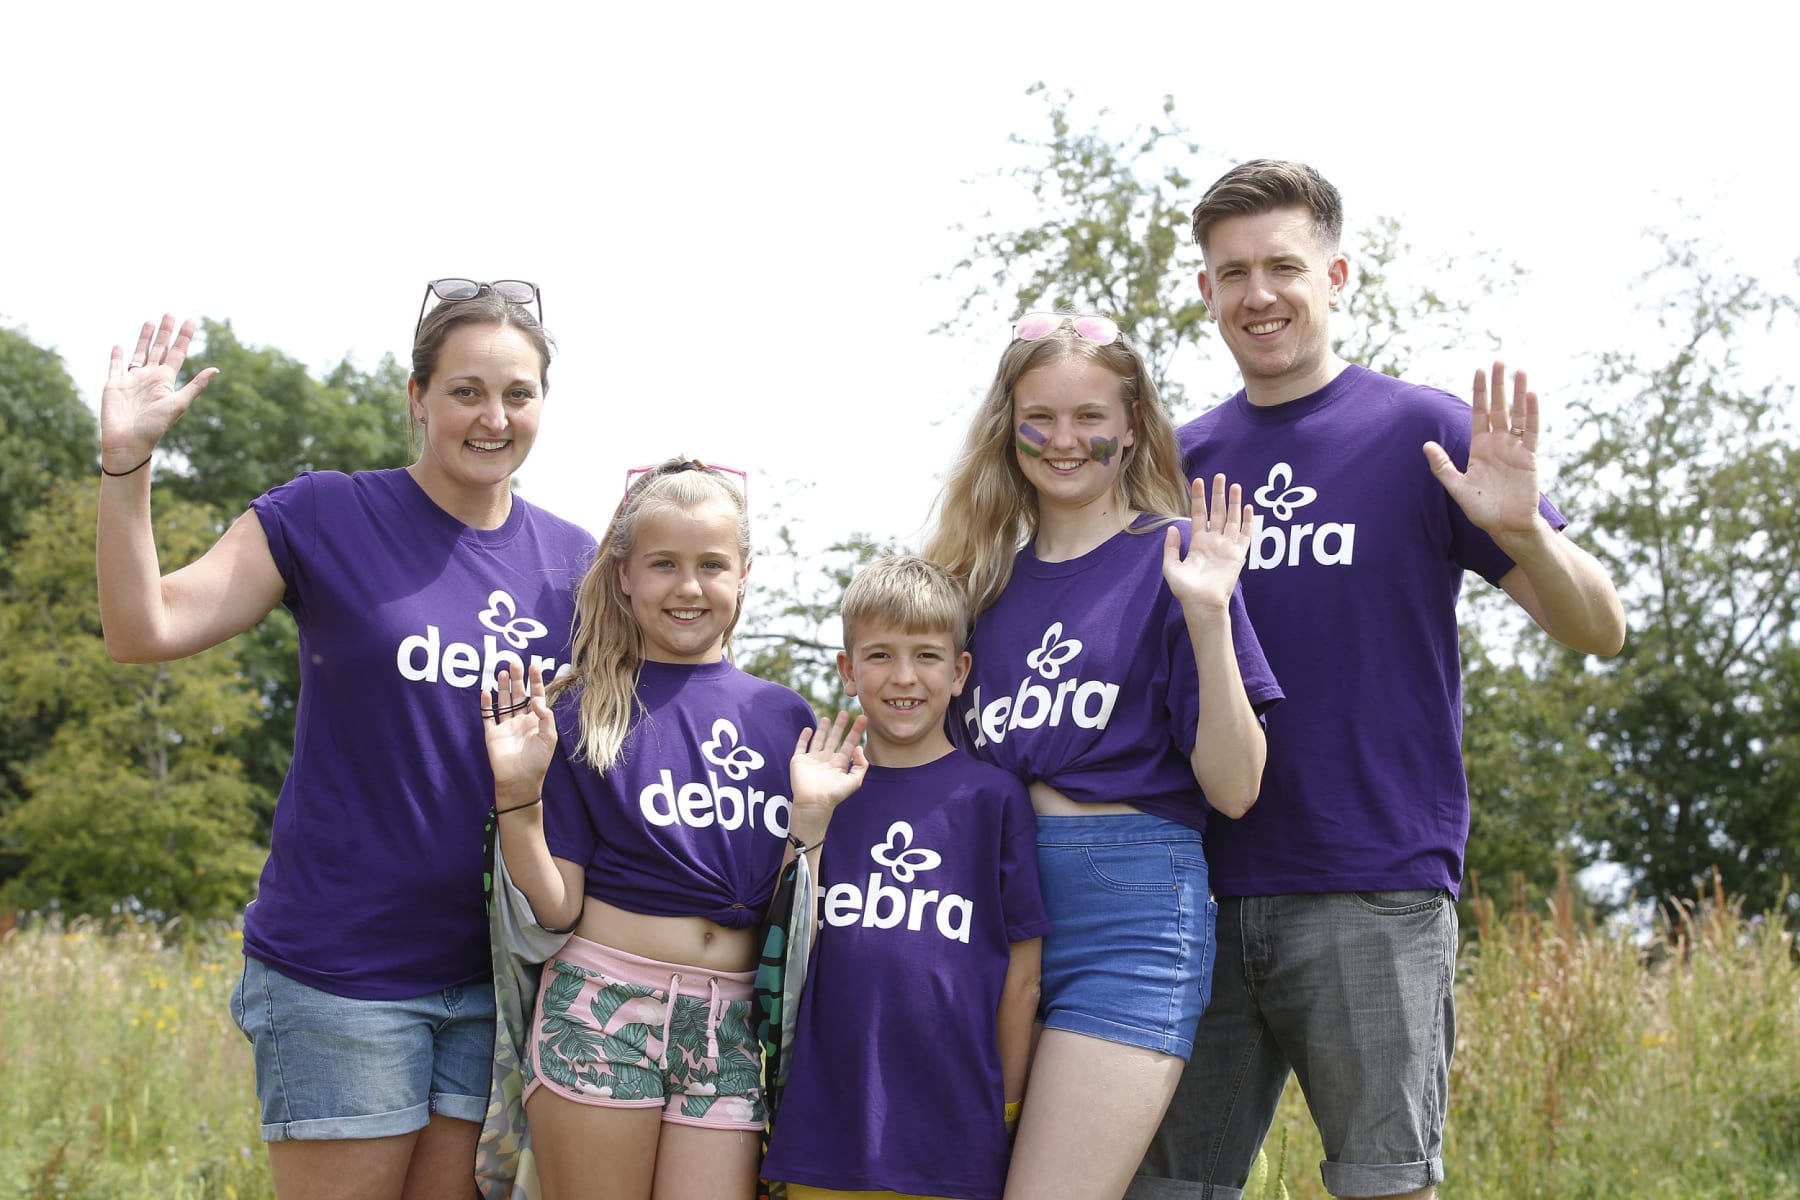 Family wearing DEBRA t-shirts